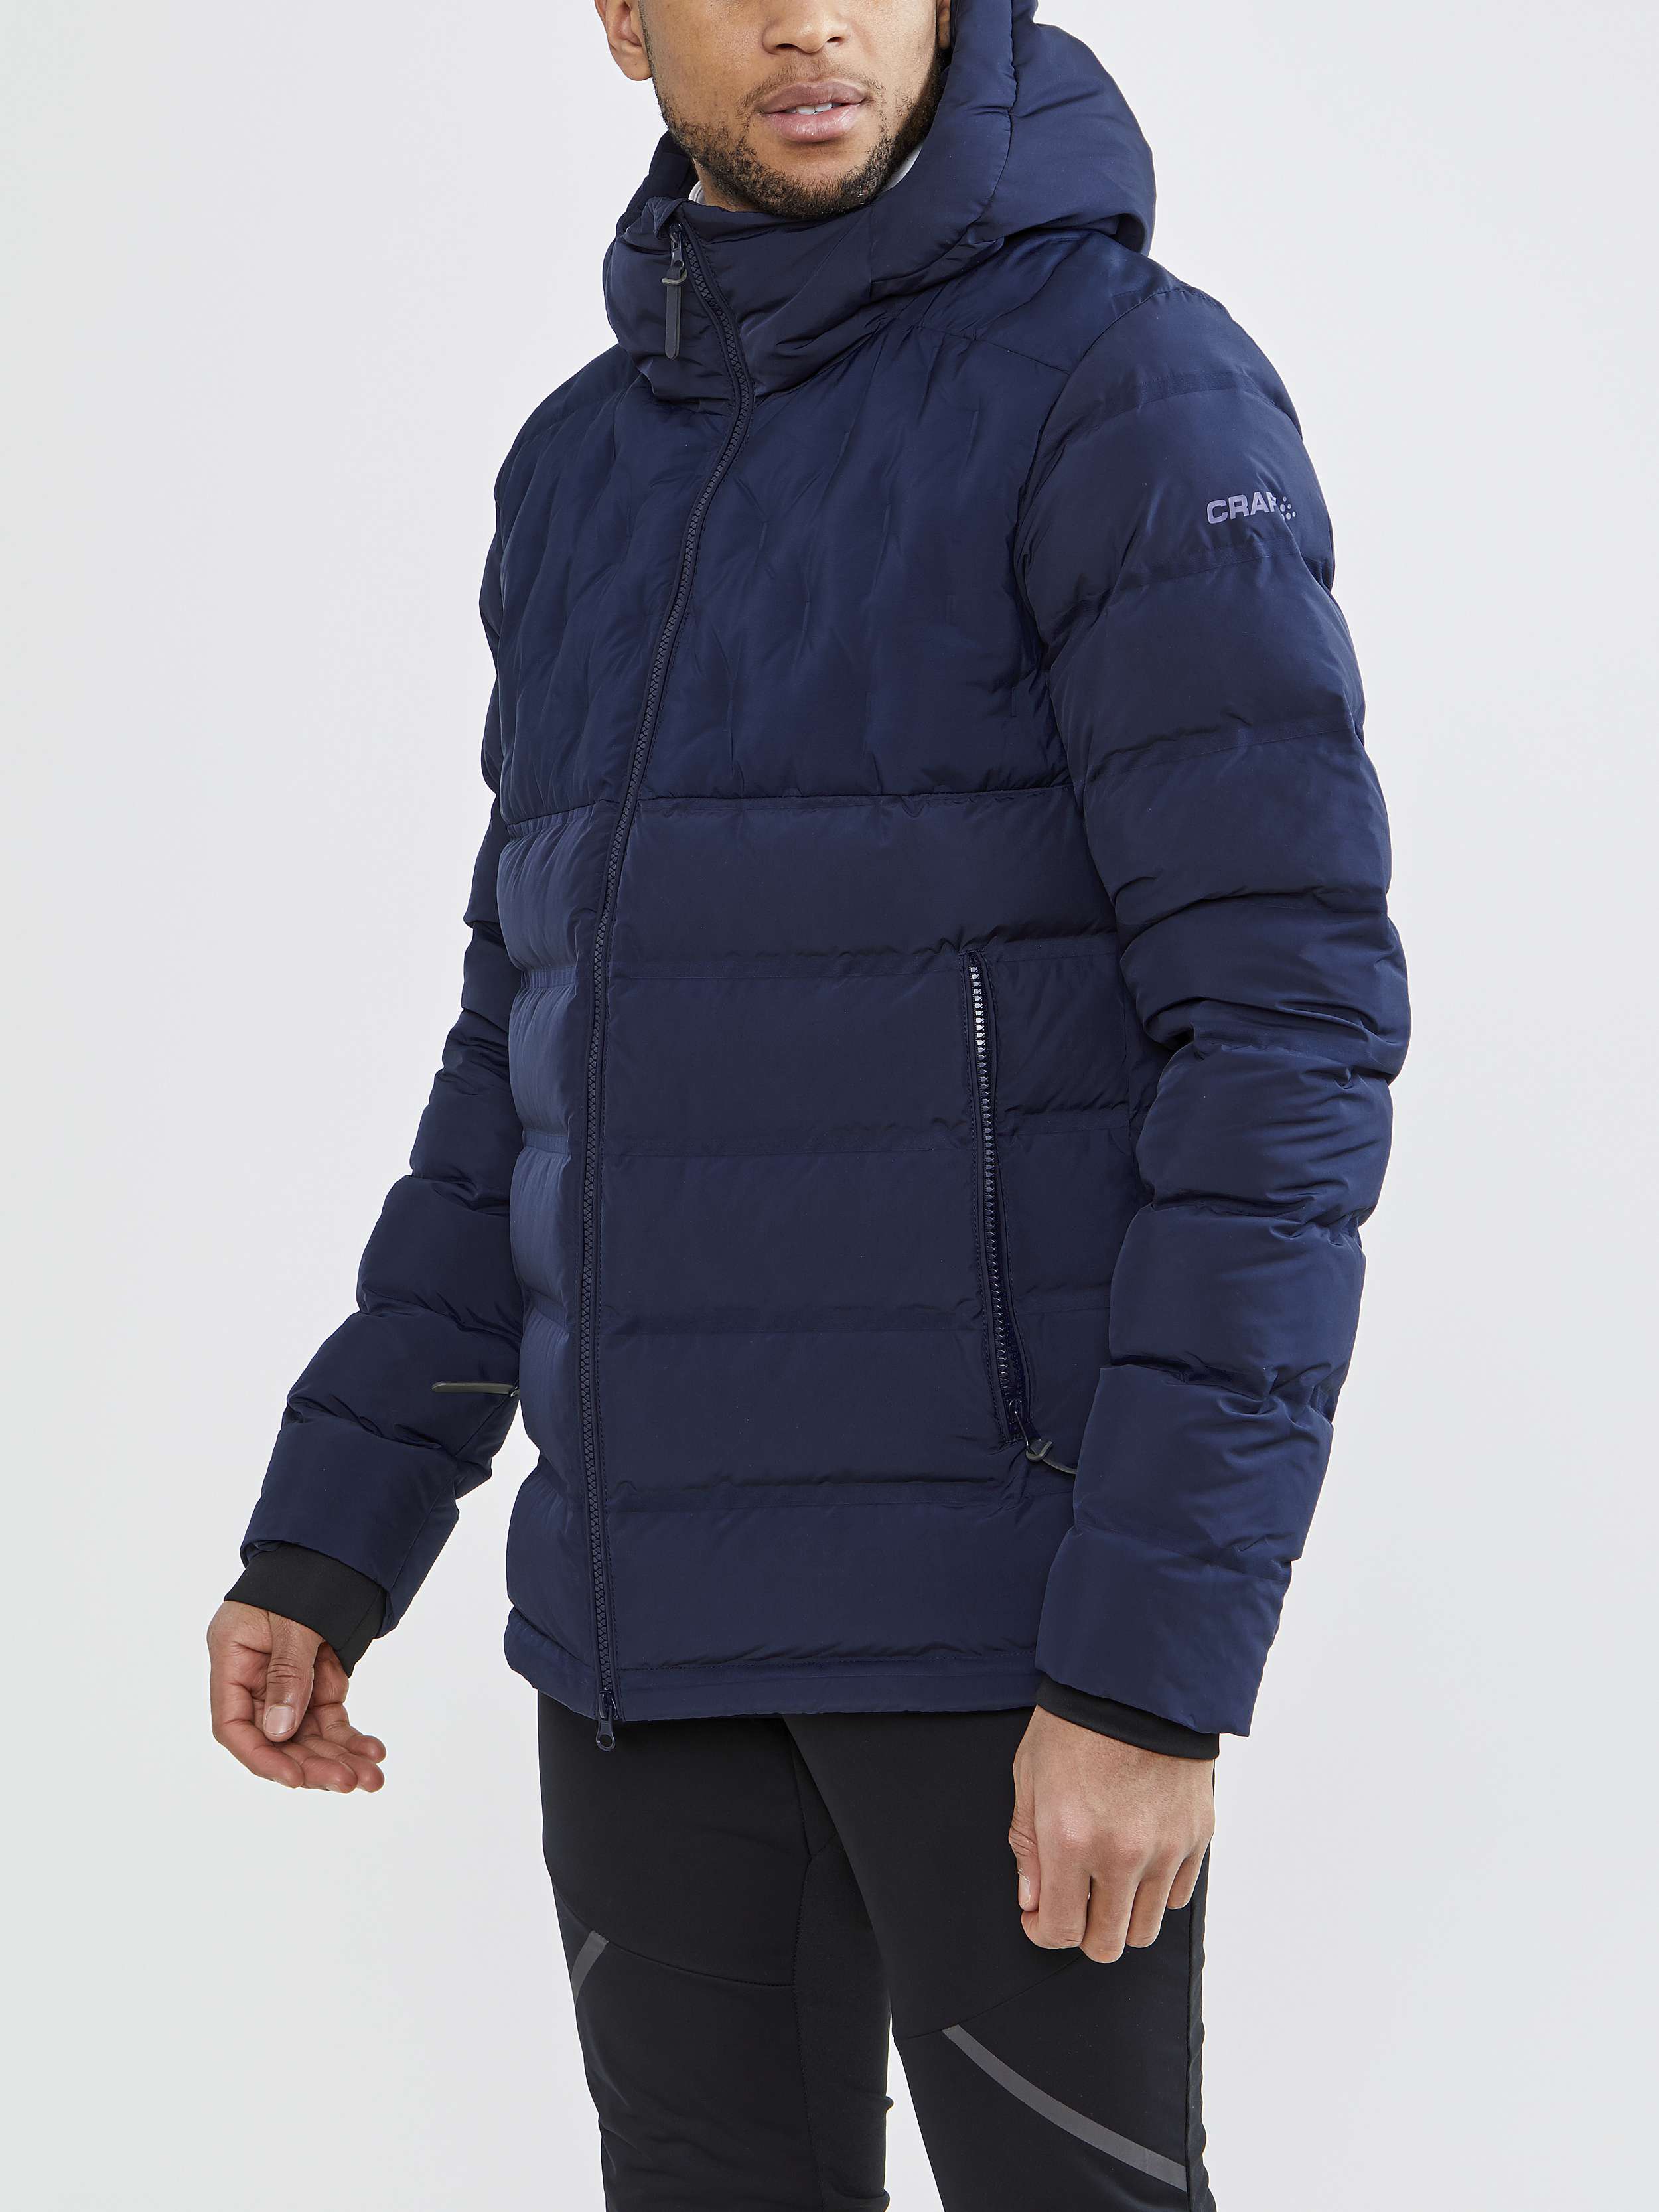 ADV Jacket M - Blue | Craft Sportswear